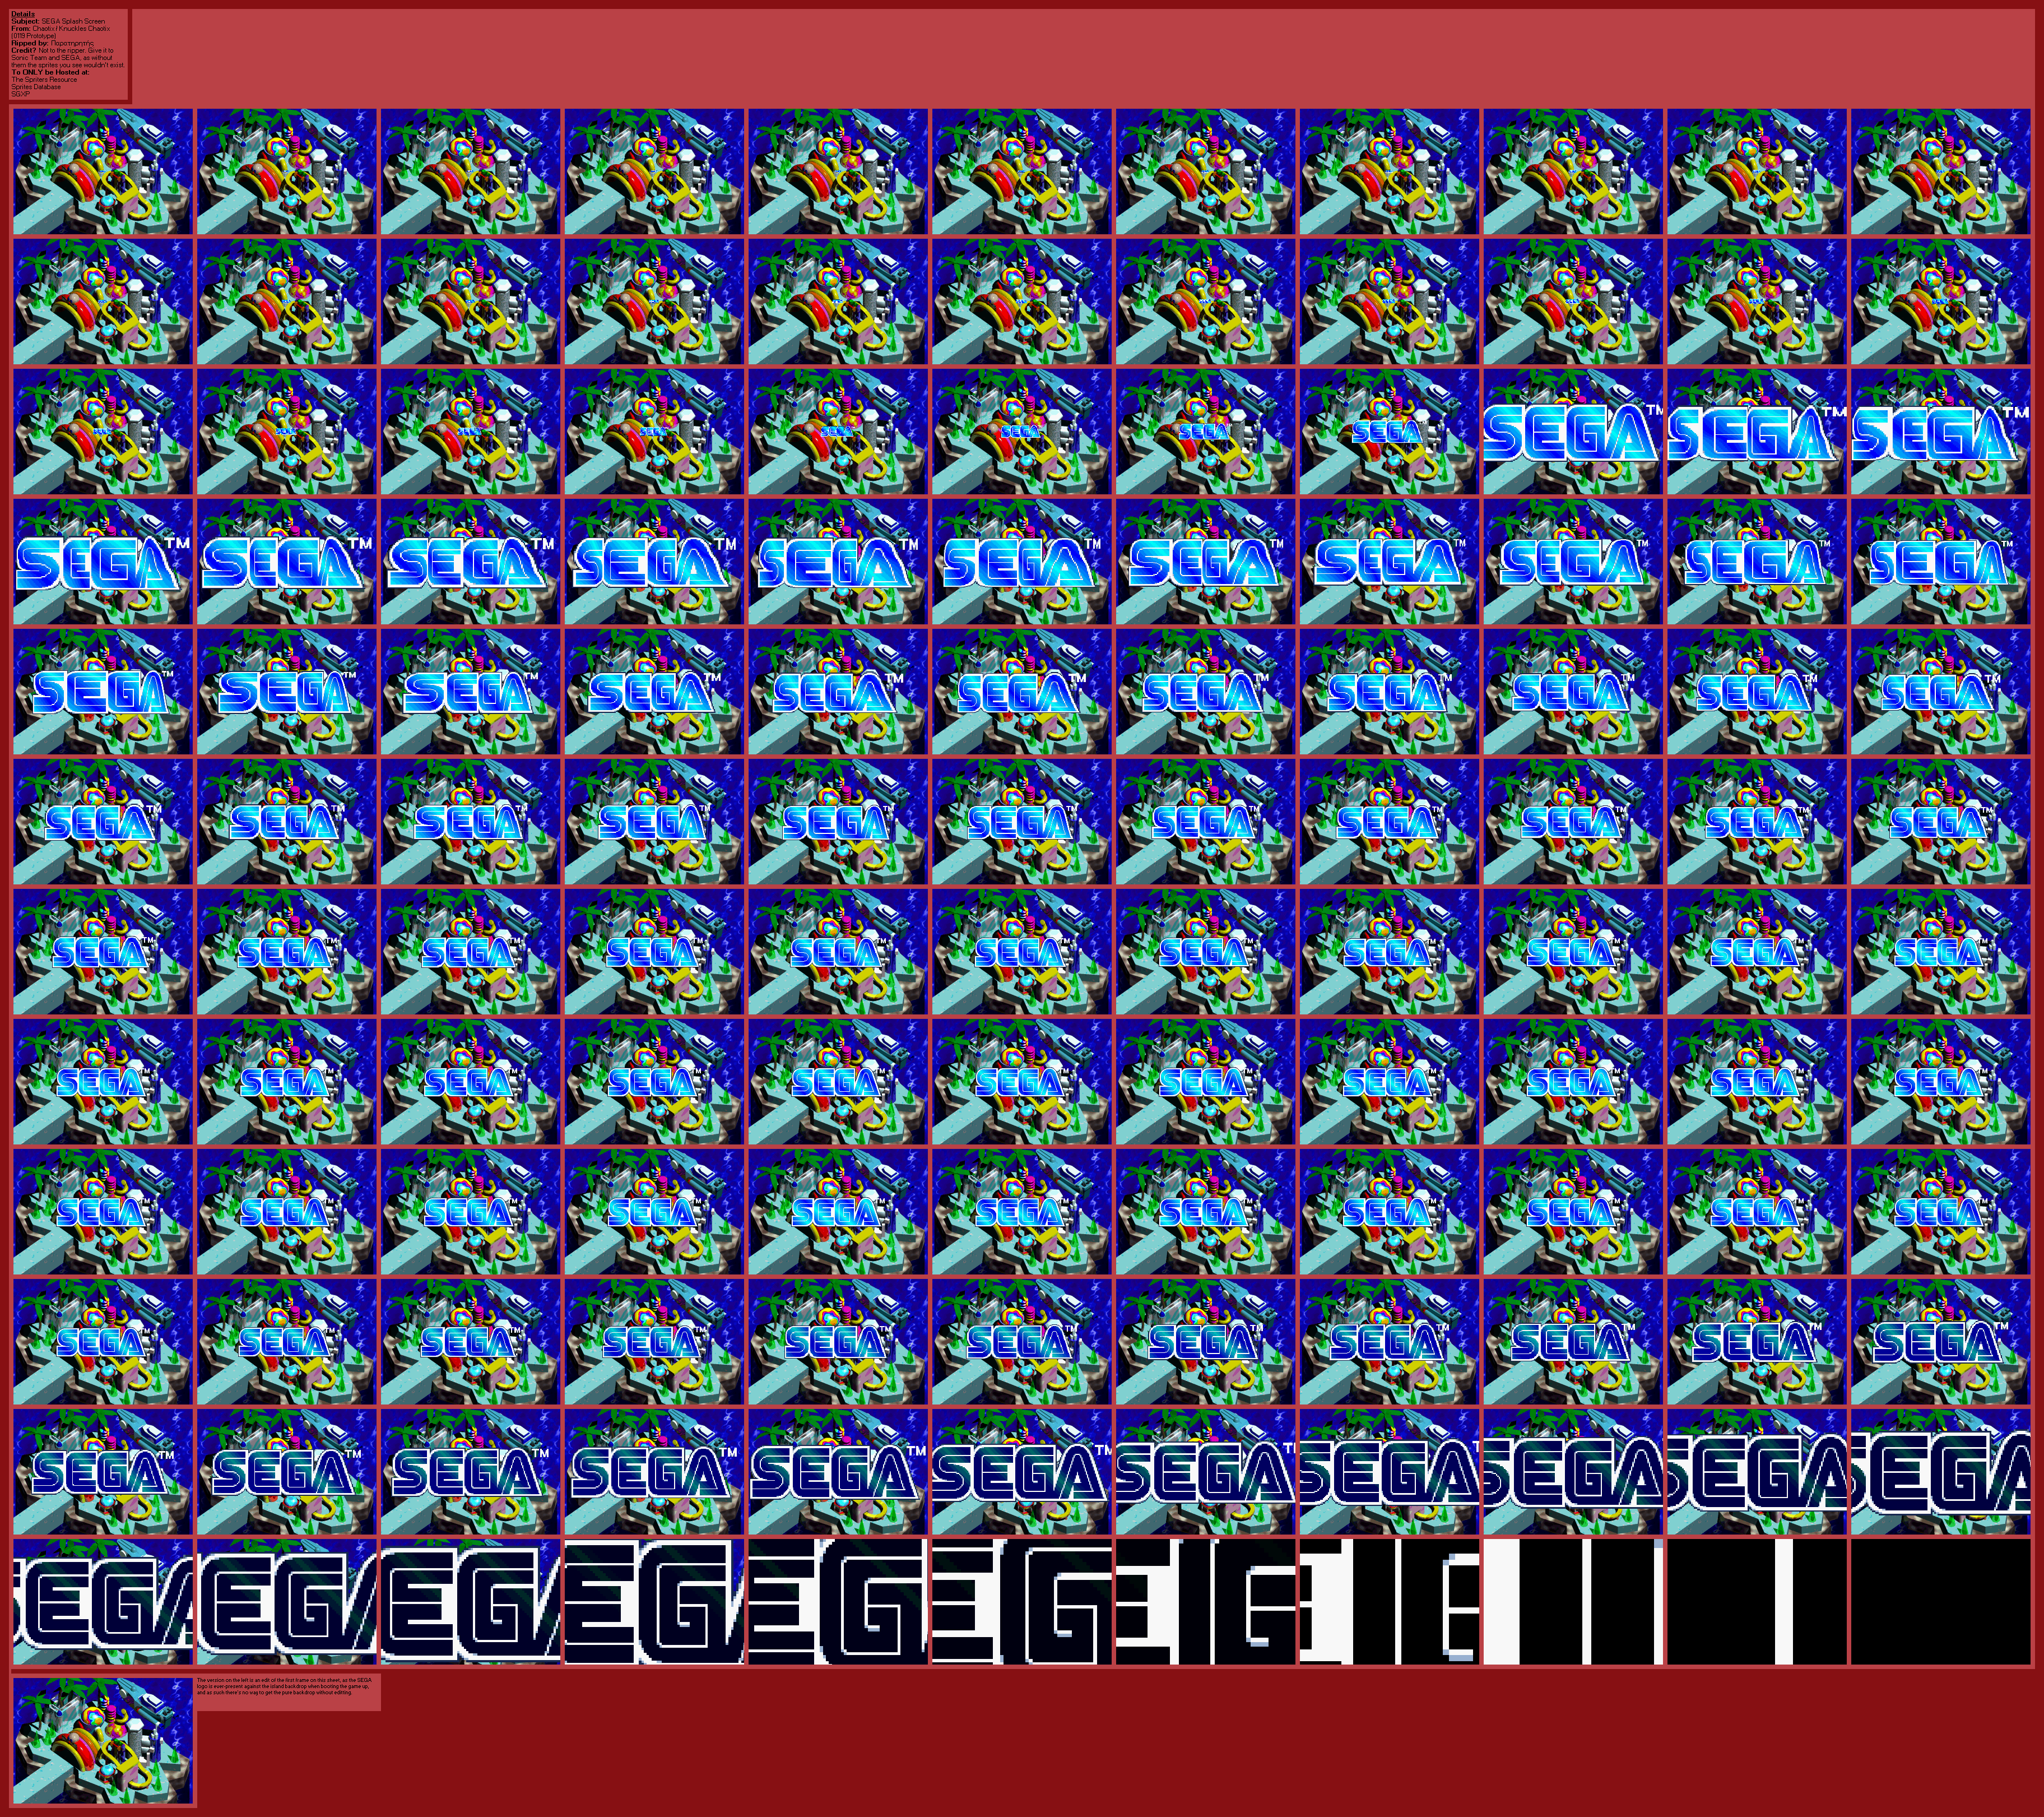 Knuckles' Chaotix (32X) - SEGA Splash Screen (Prototypes)